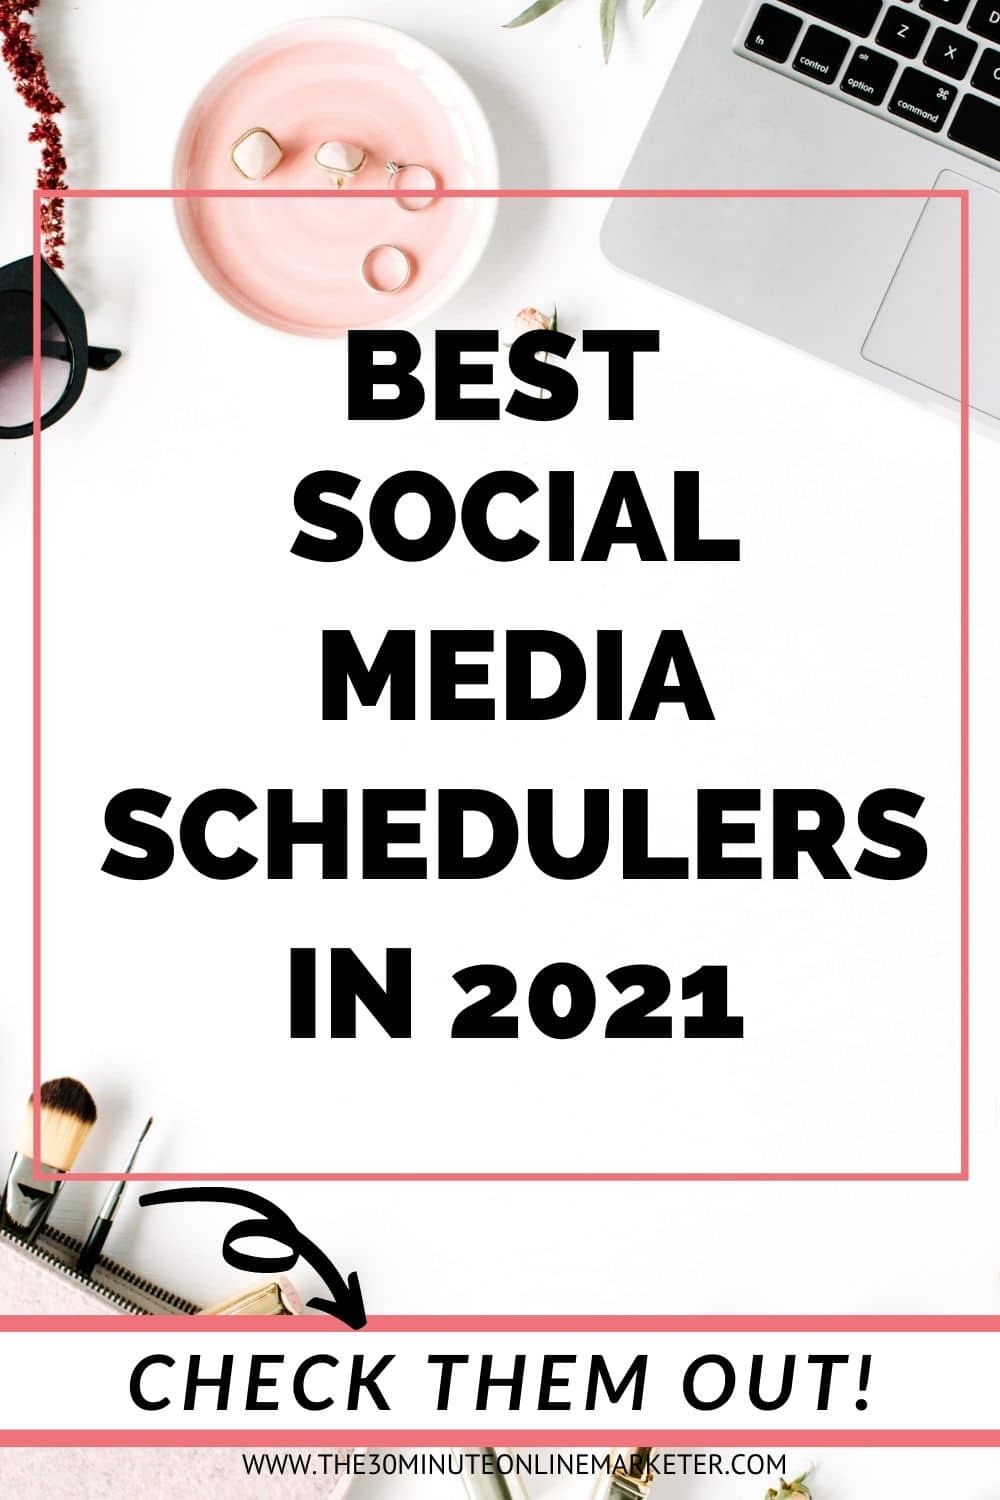 Best Social Media Schedulers